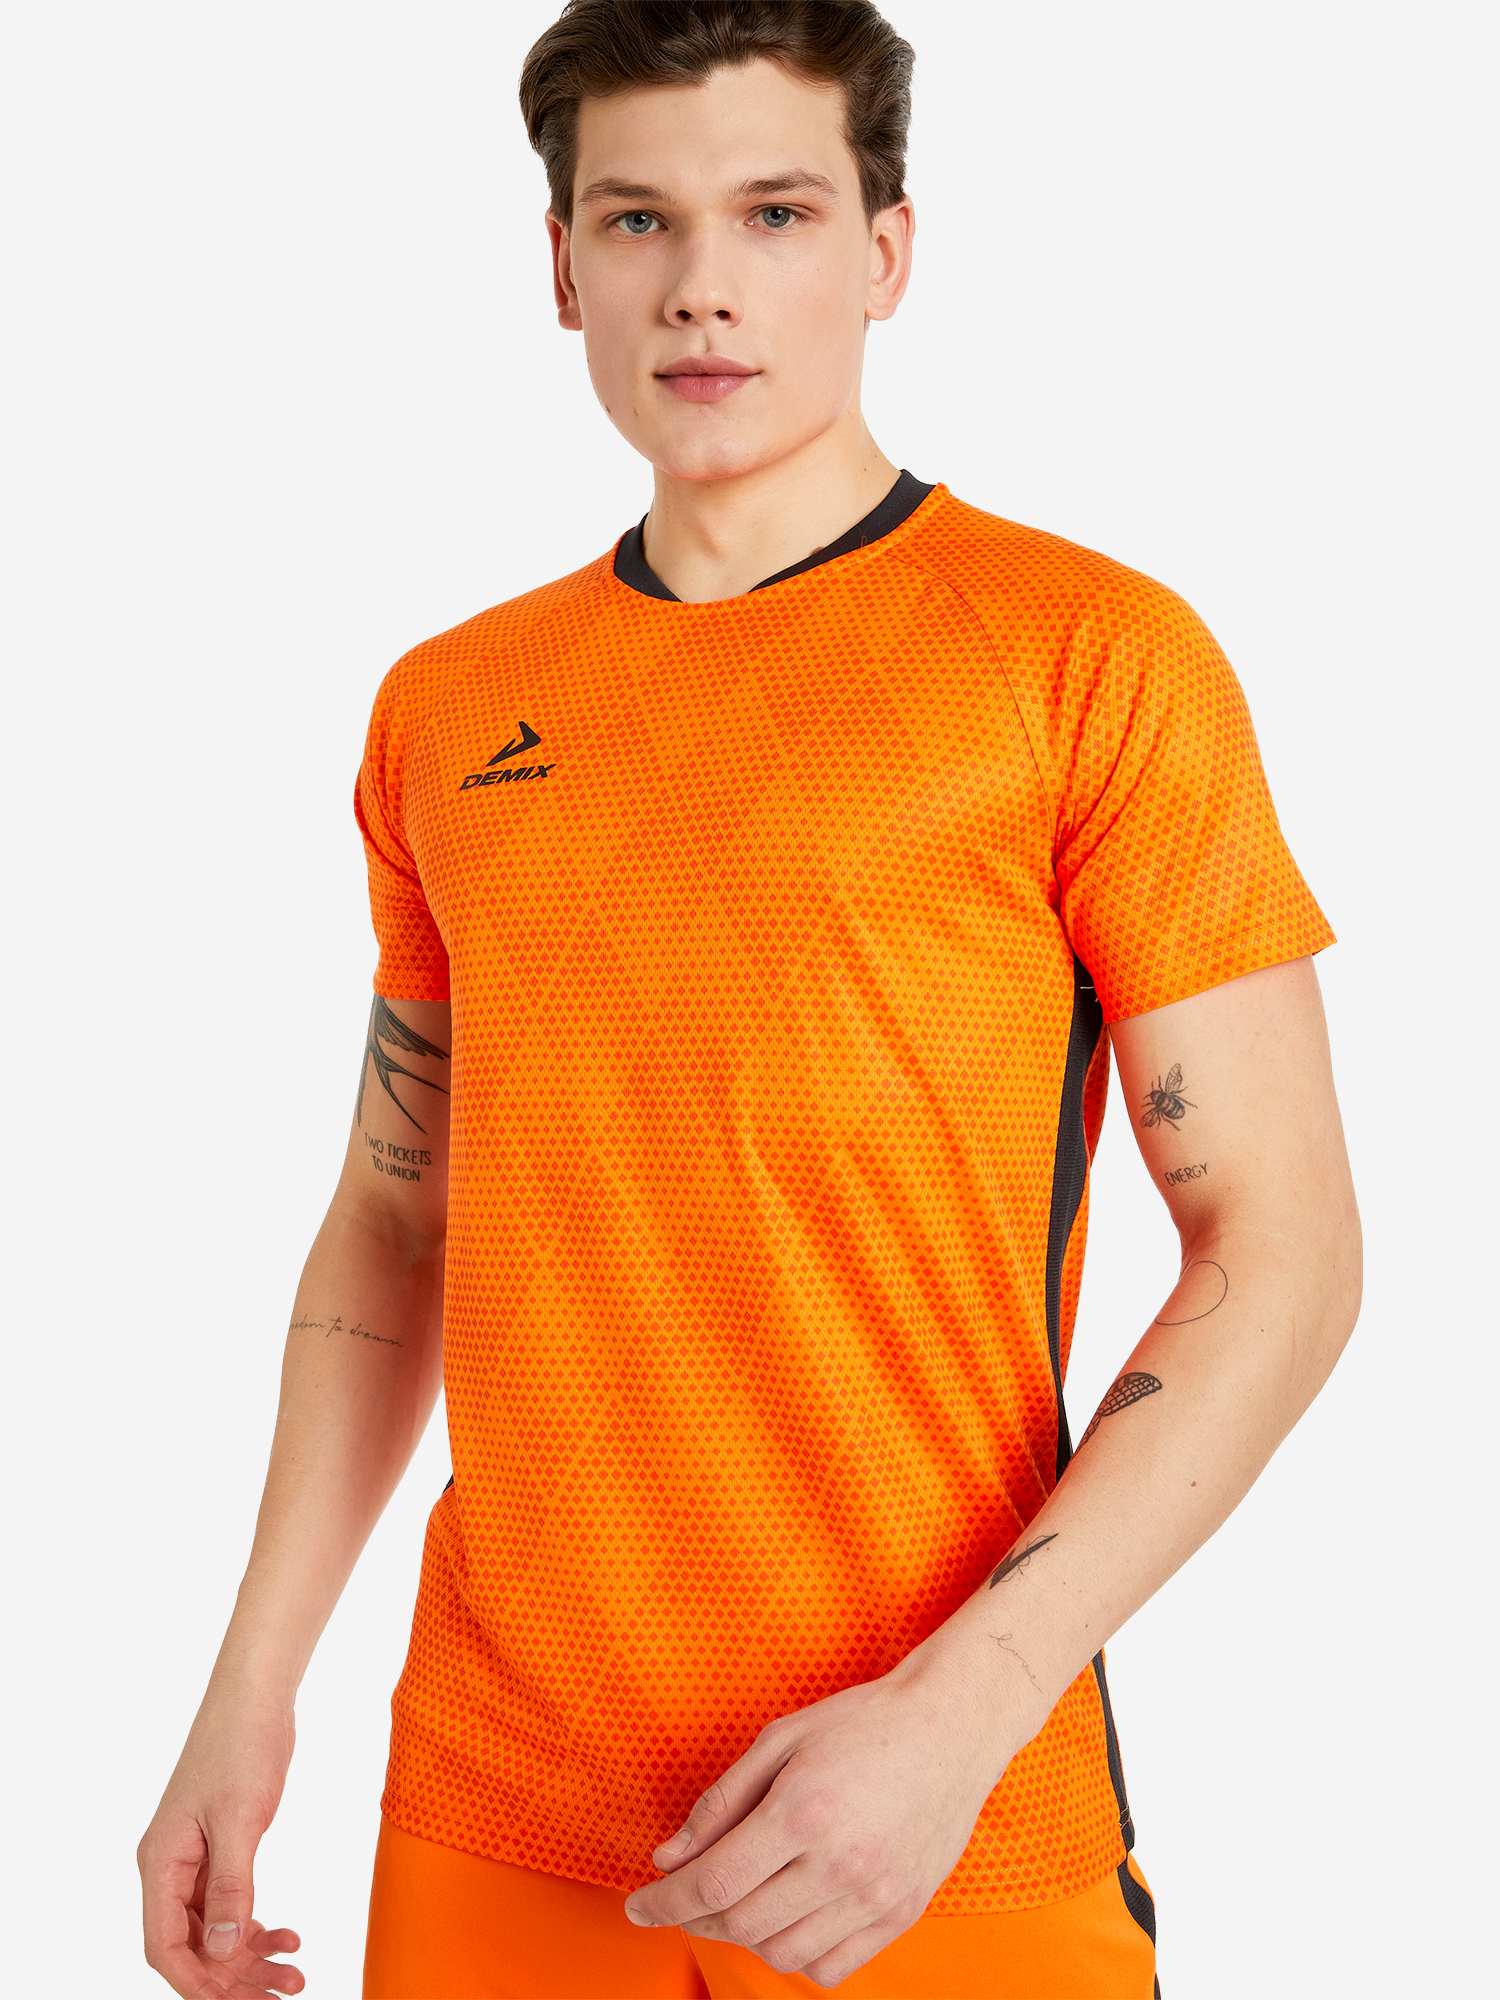 Футболка мужская Demix Strike, Оранжевый футболка мужская demix pace оранжевый